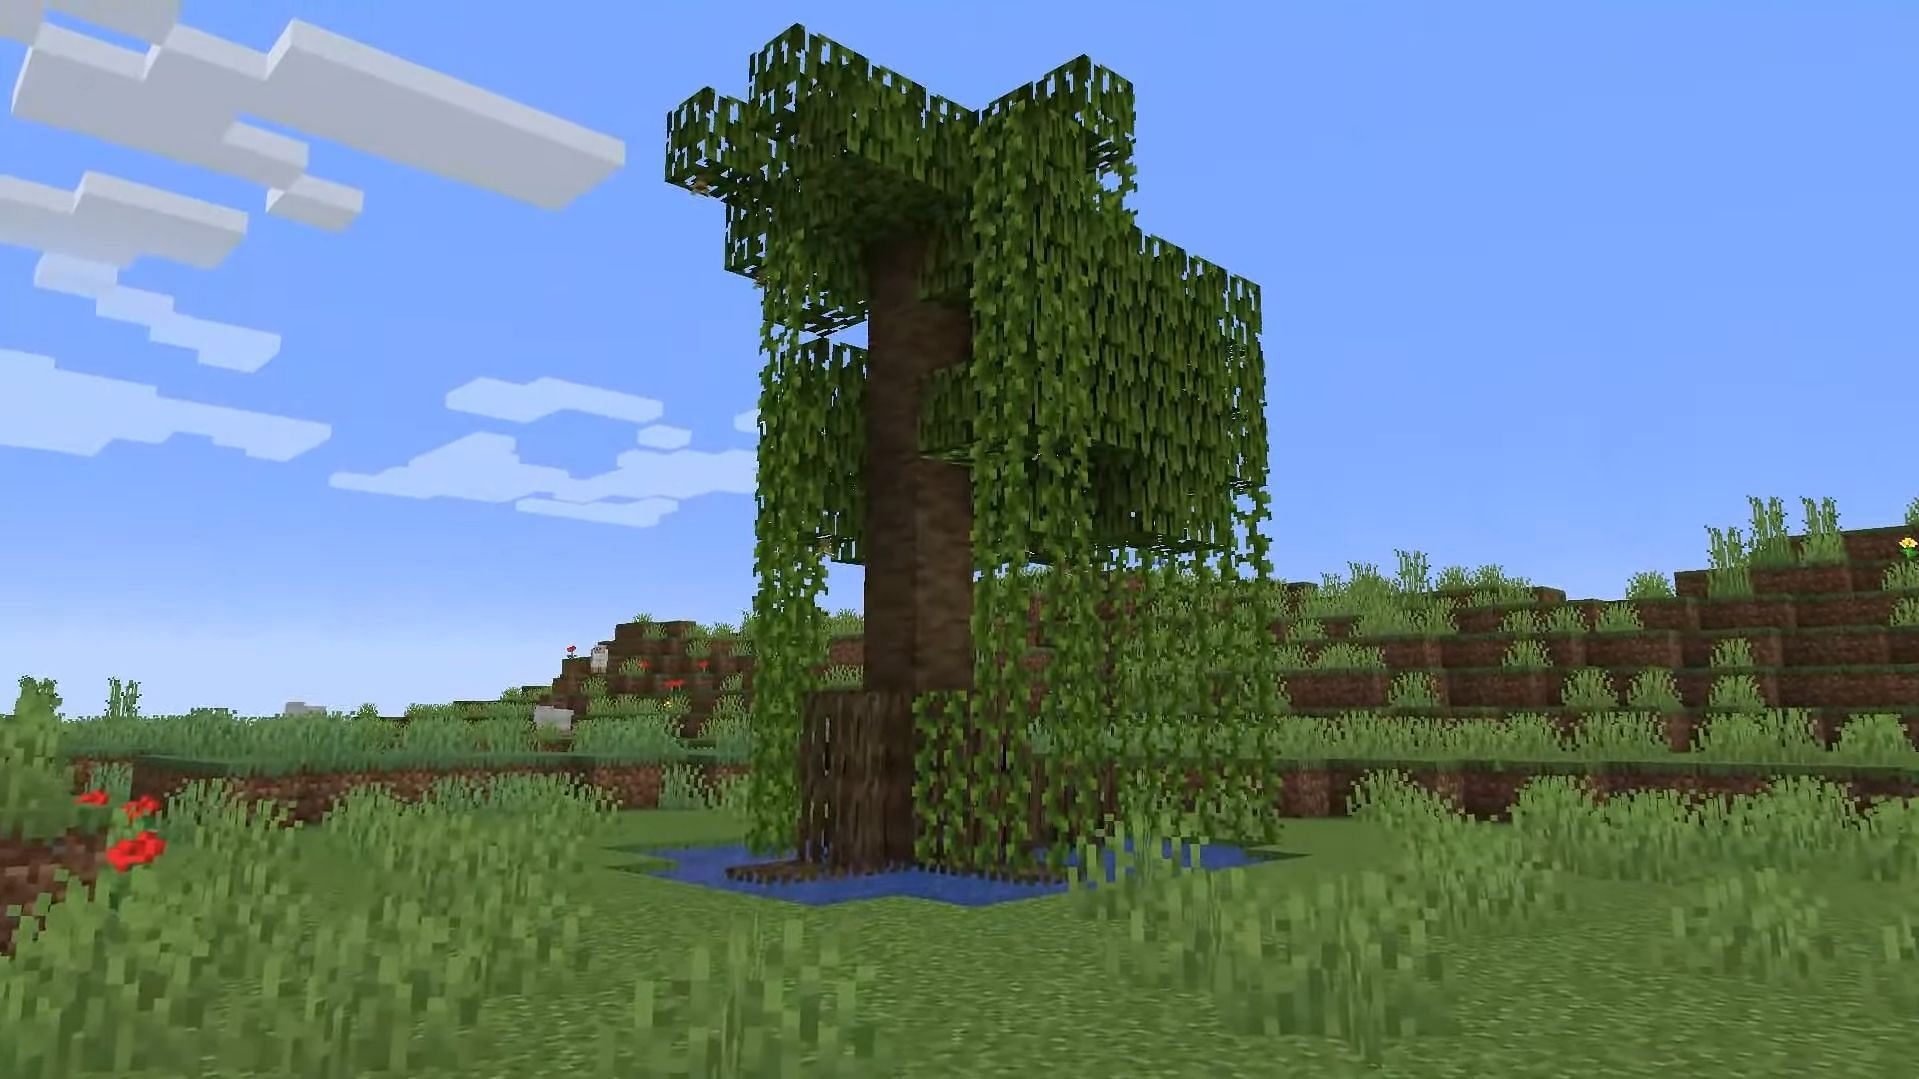 A mangrove tree in Minecraft (Image via Mojang)